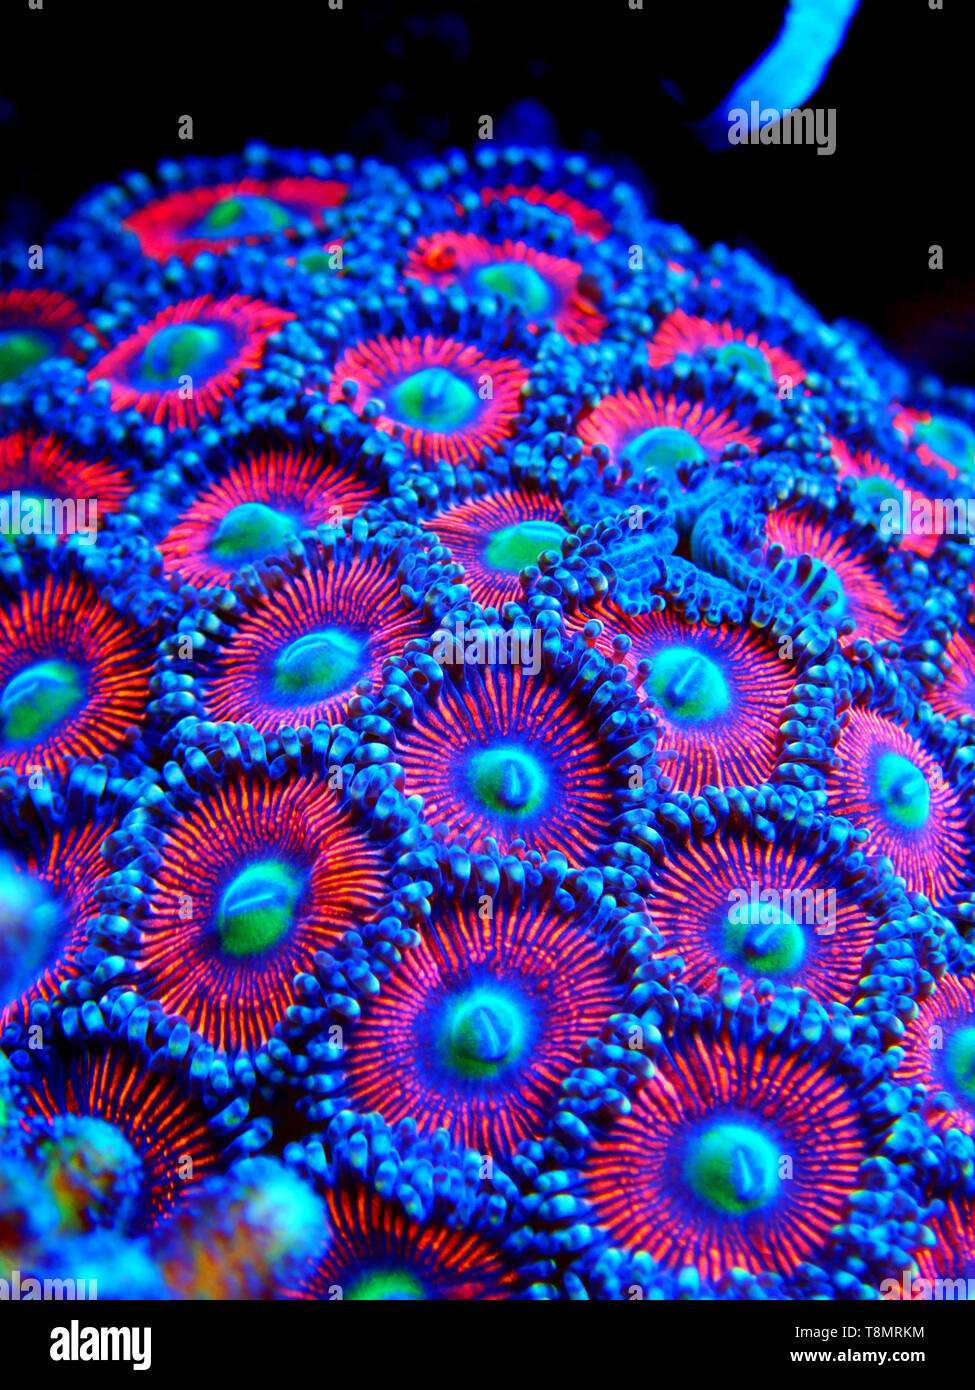 Zoanthus polyps colony aquacultured in coral reef aquarium tank Stock Photo